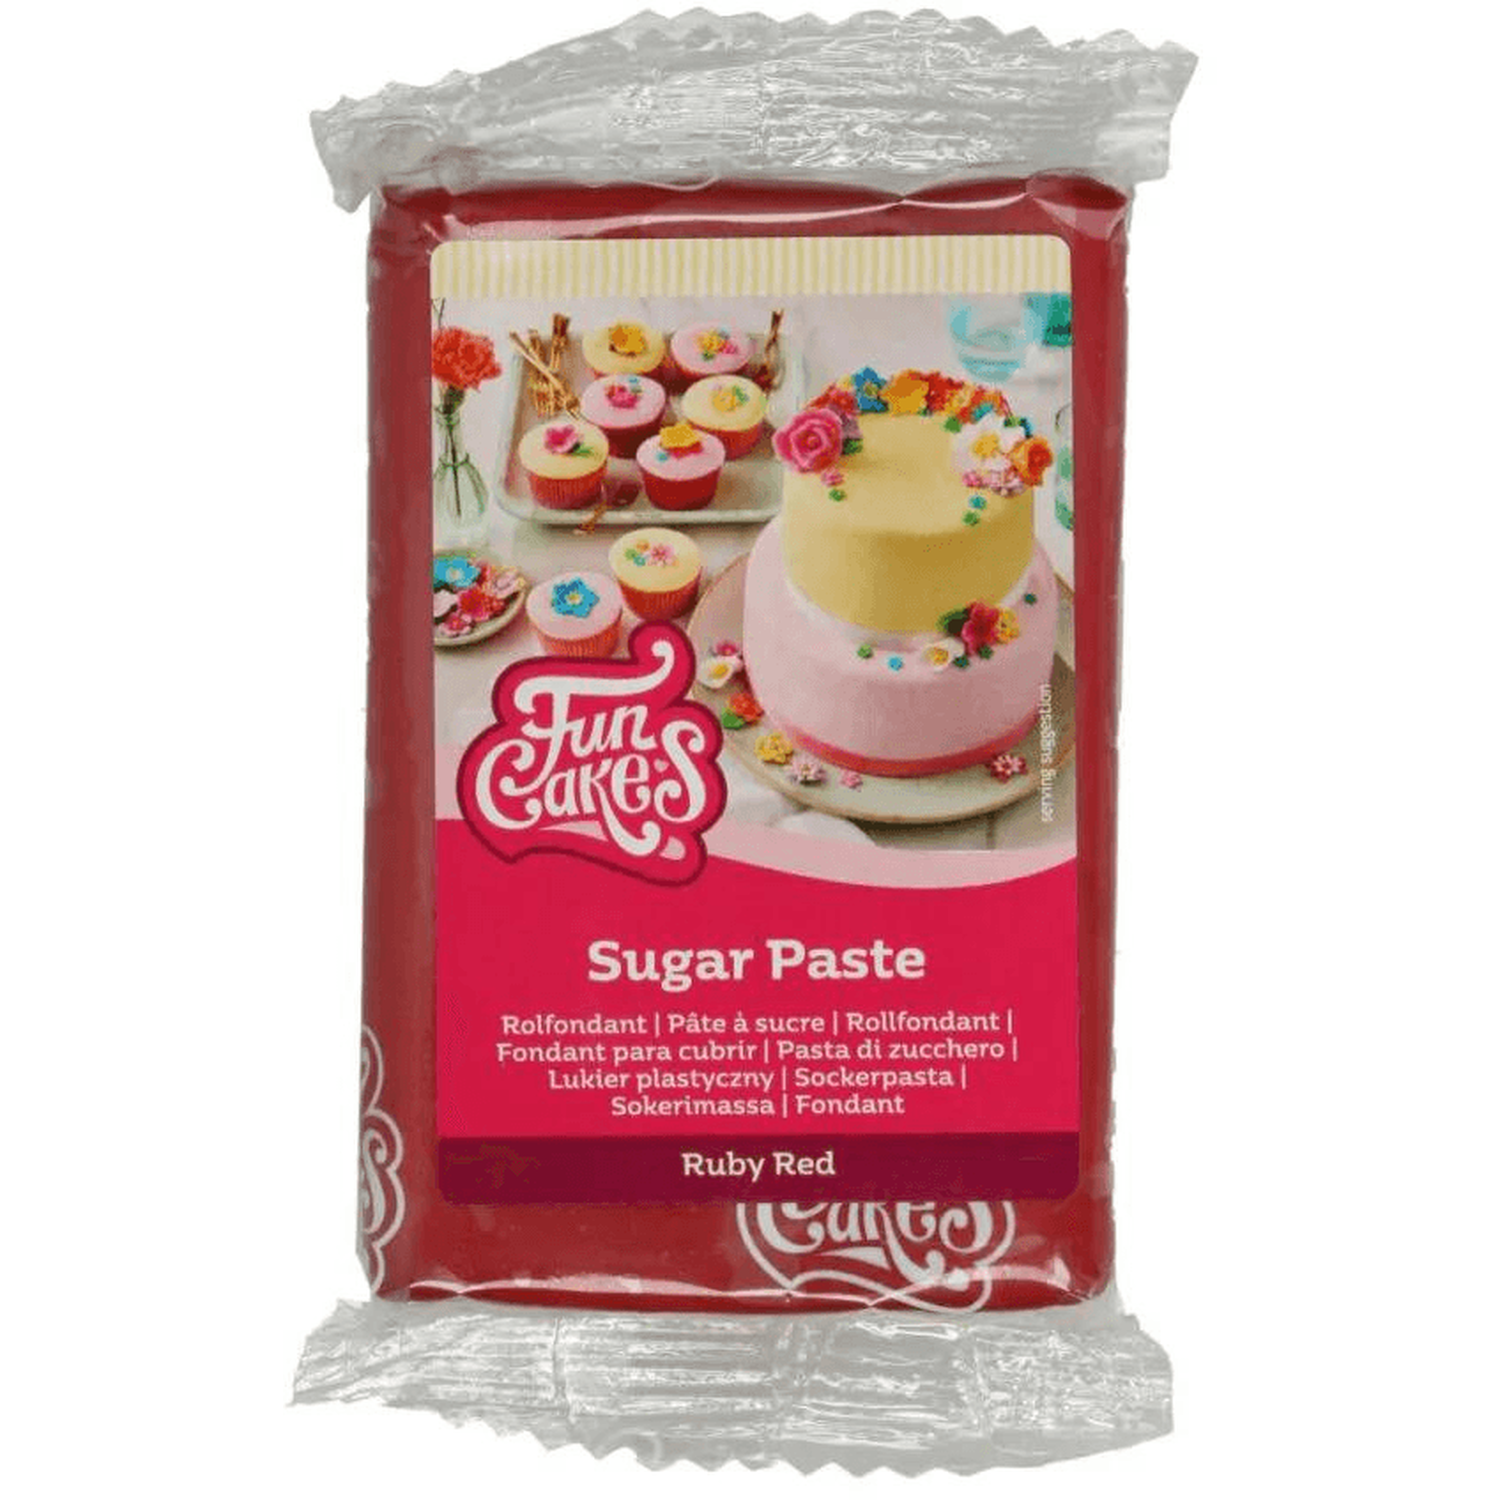 Funcakes Sugar Paste - Ruby Red Image